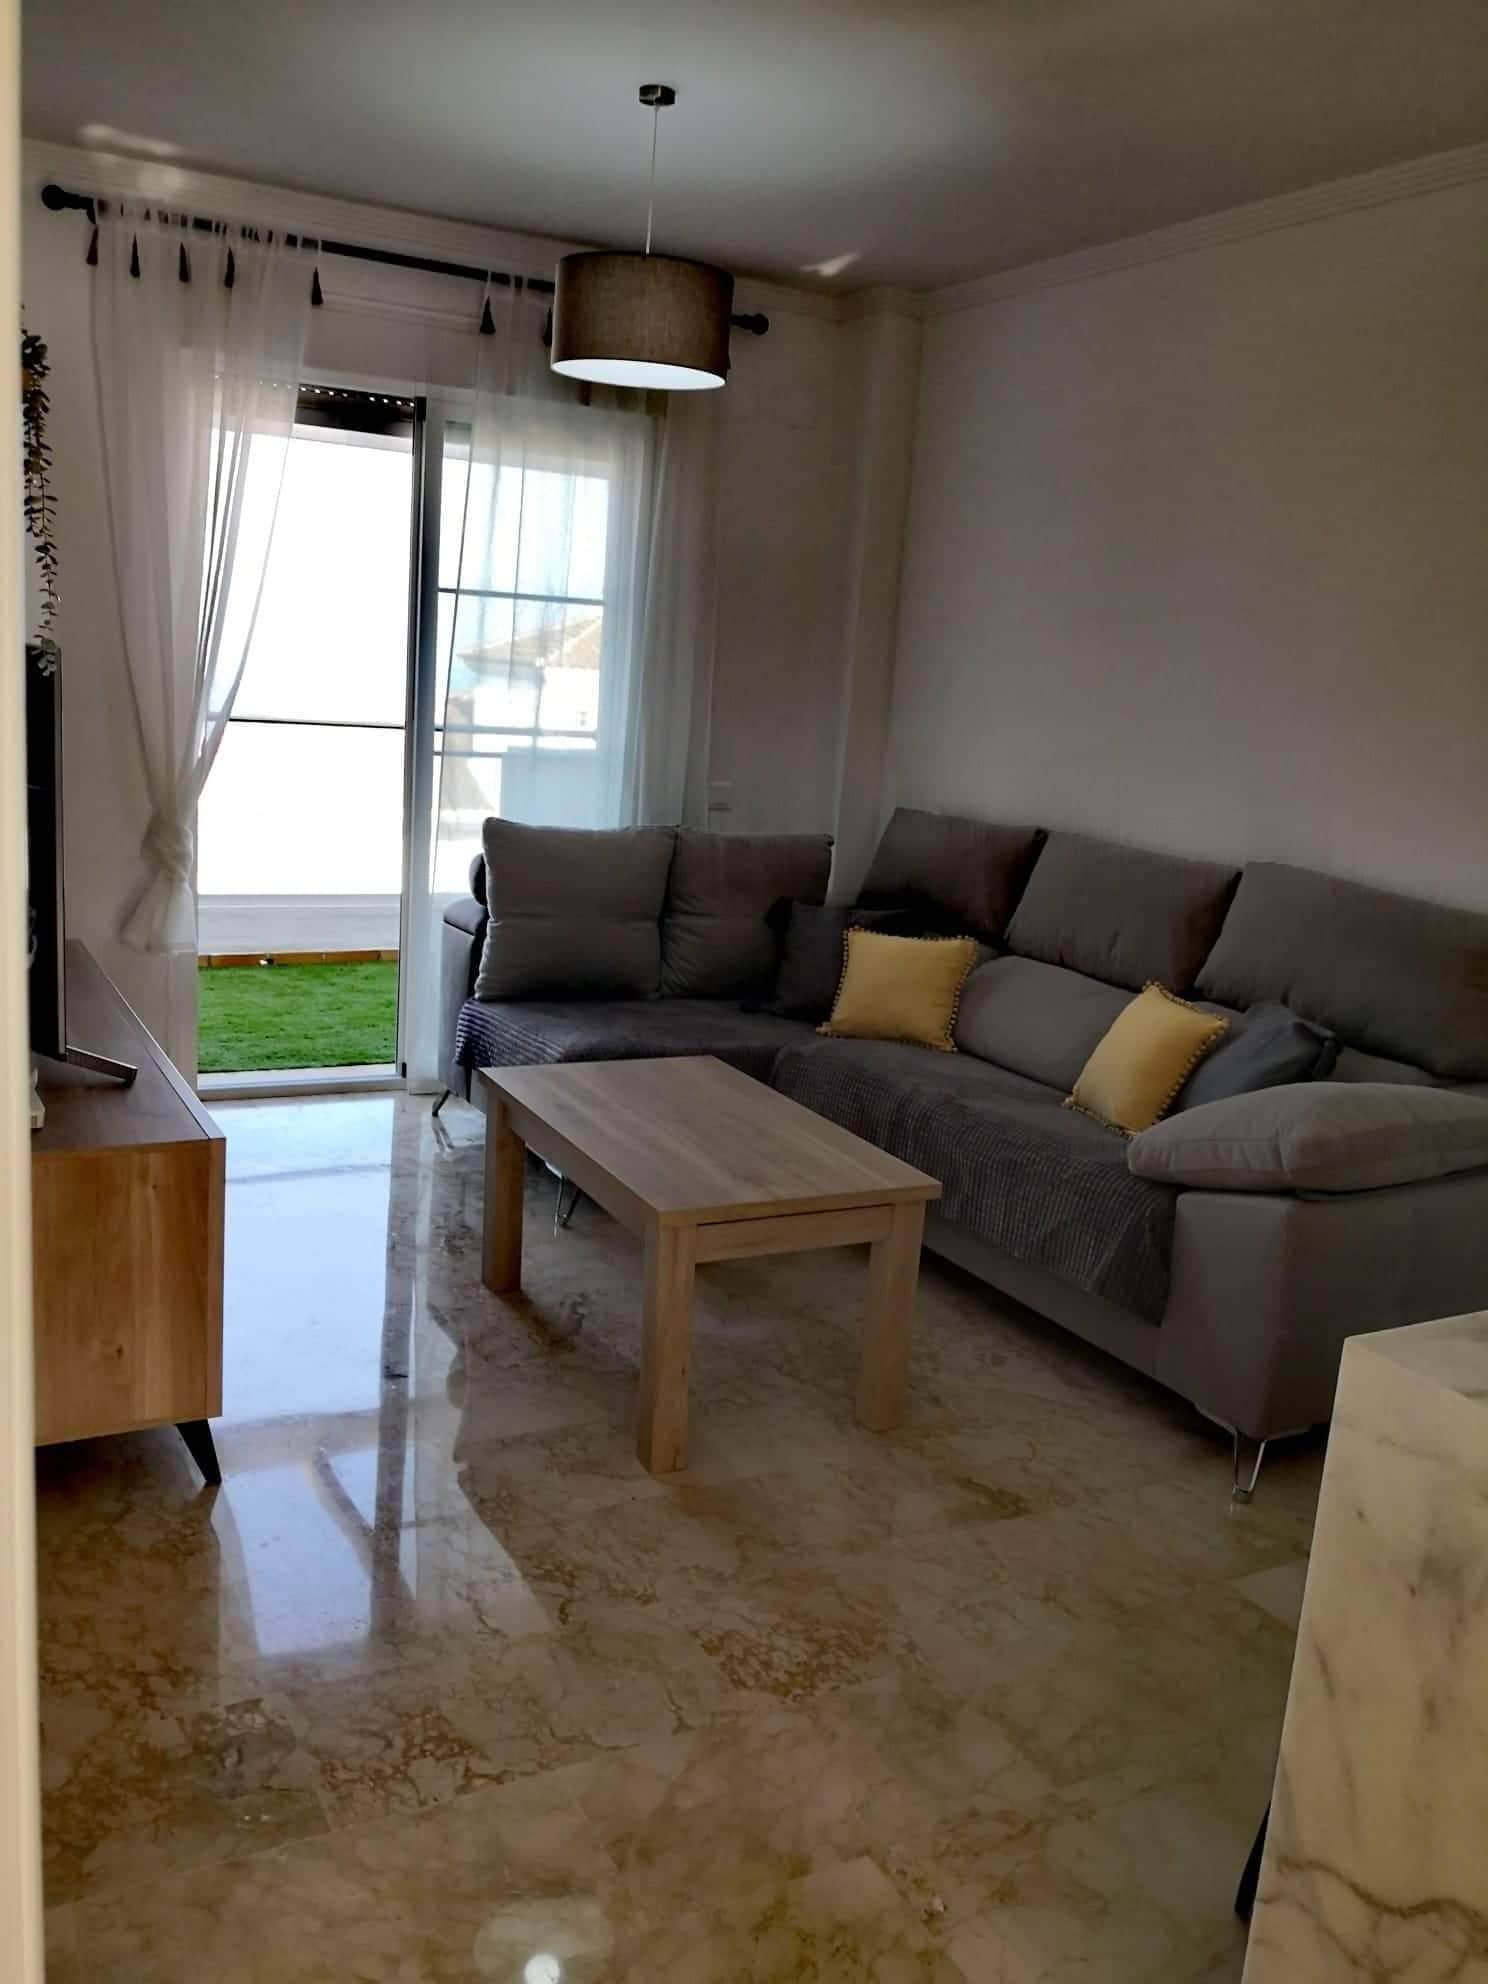 Living room apartment in malaga